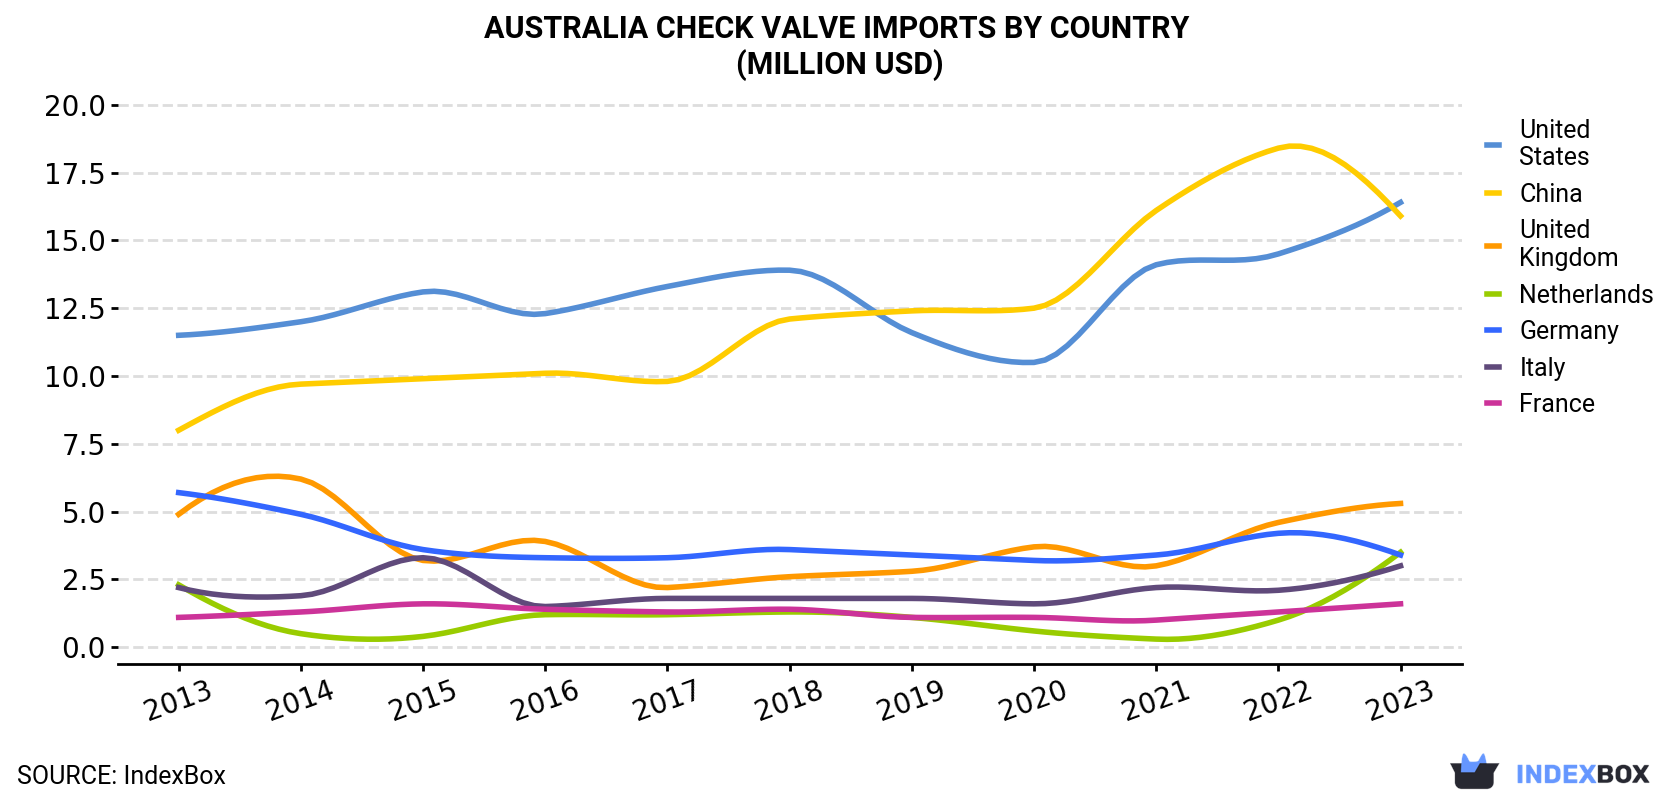 Australia Check Valve Imports By Country (Million USD)